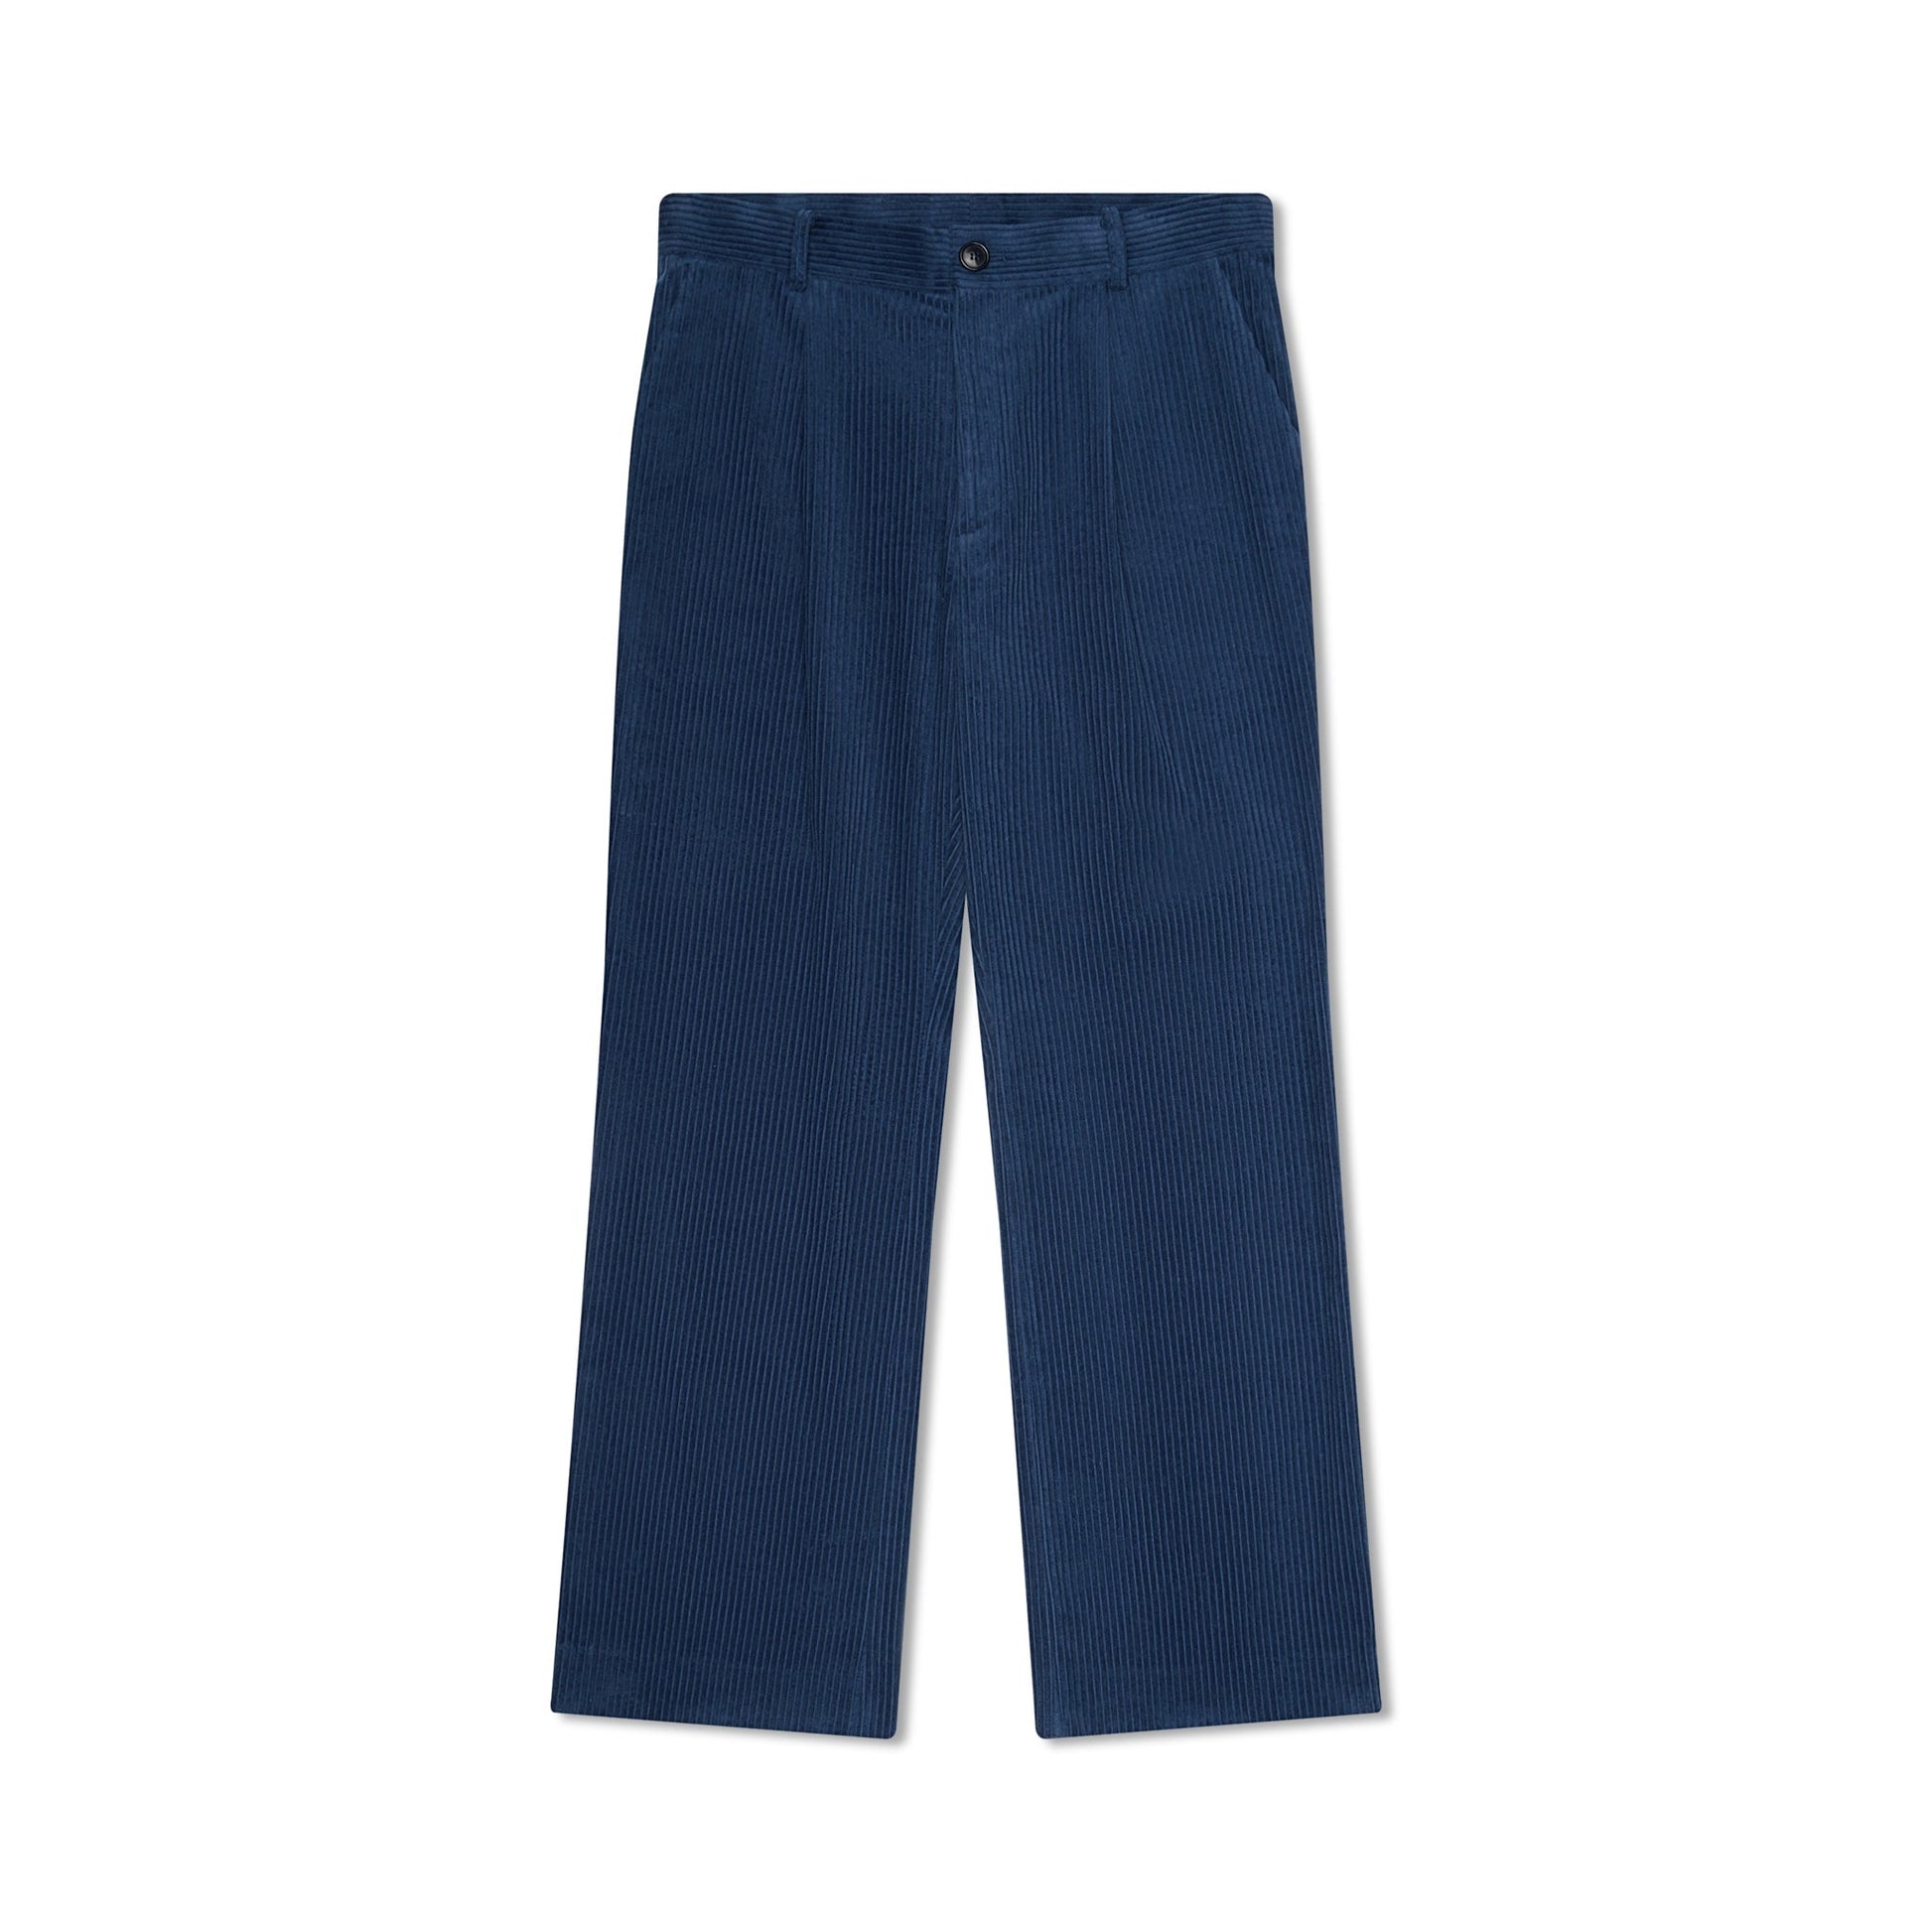 Blue Corduroy Pants - Minted New York